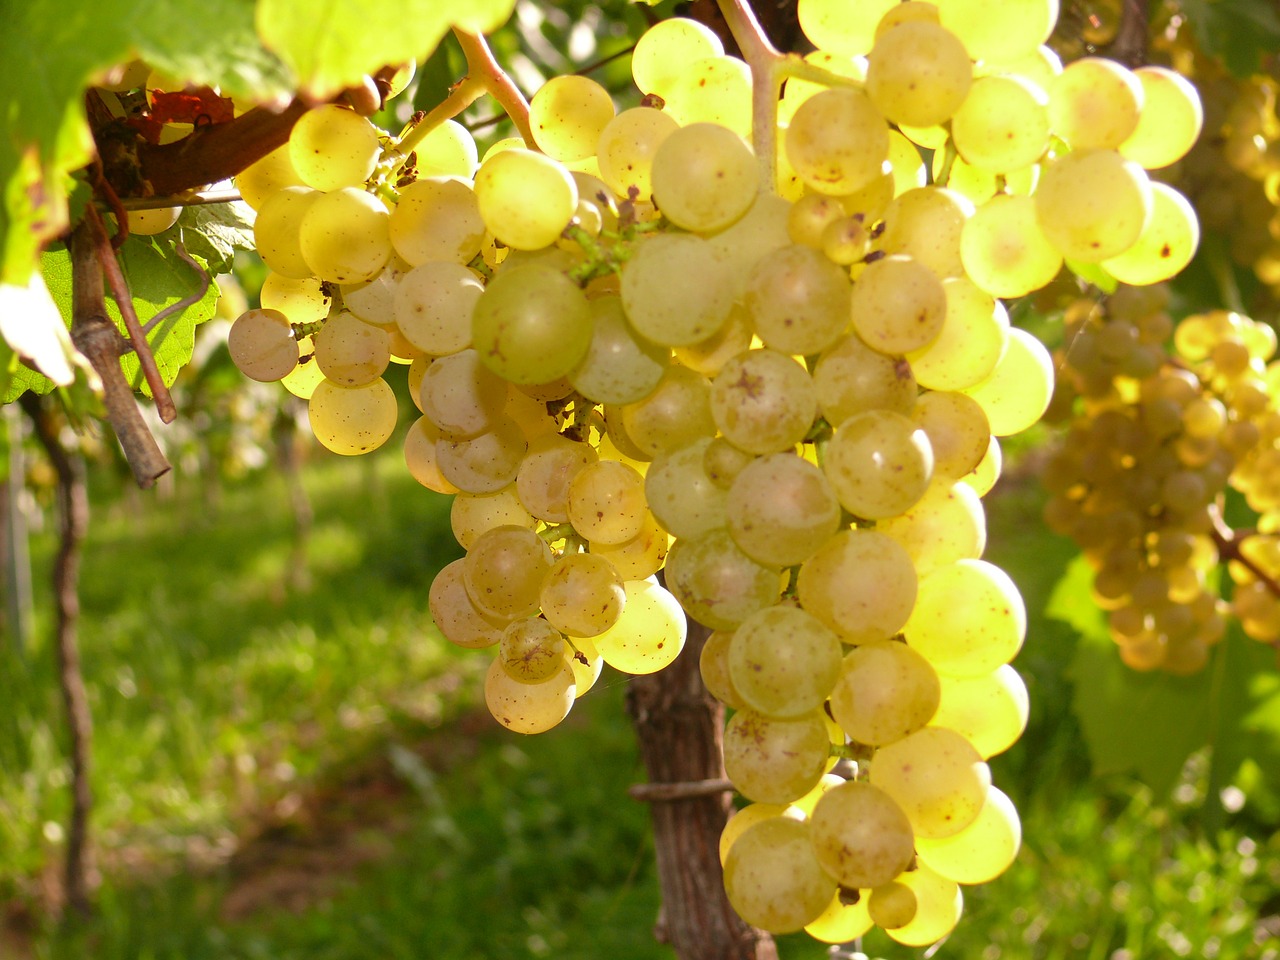 grapes vineyard wine free photo